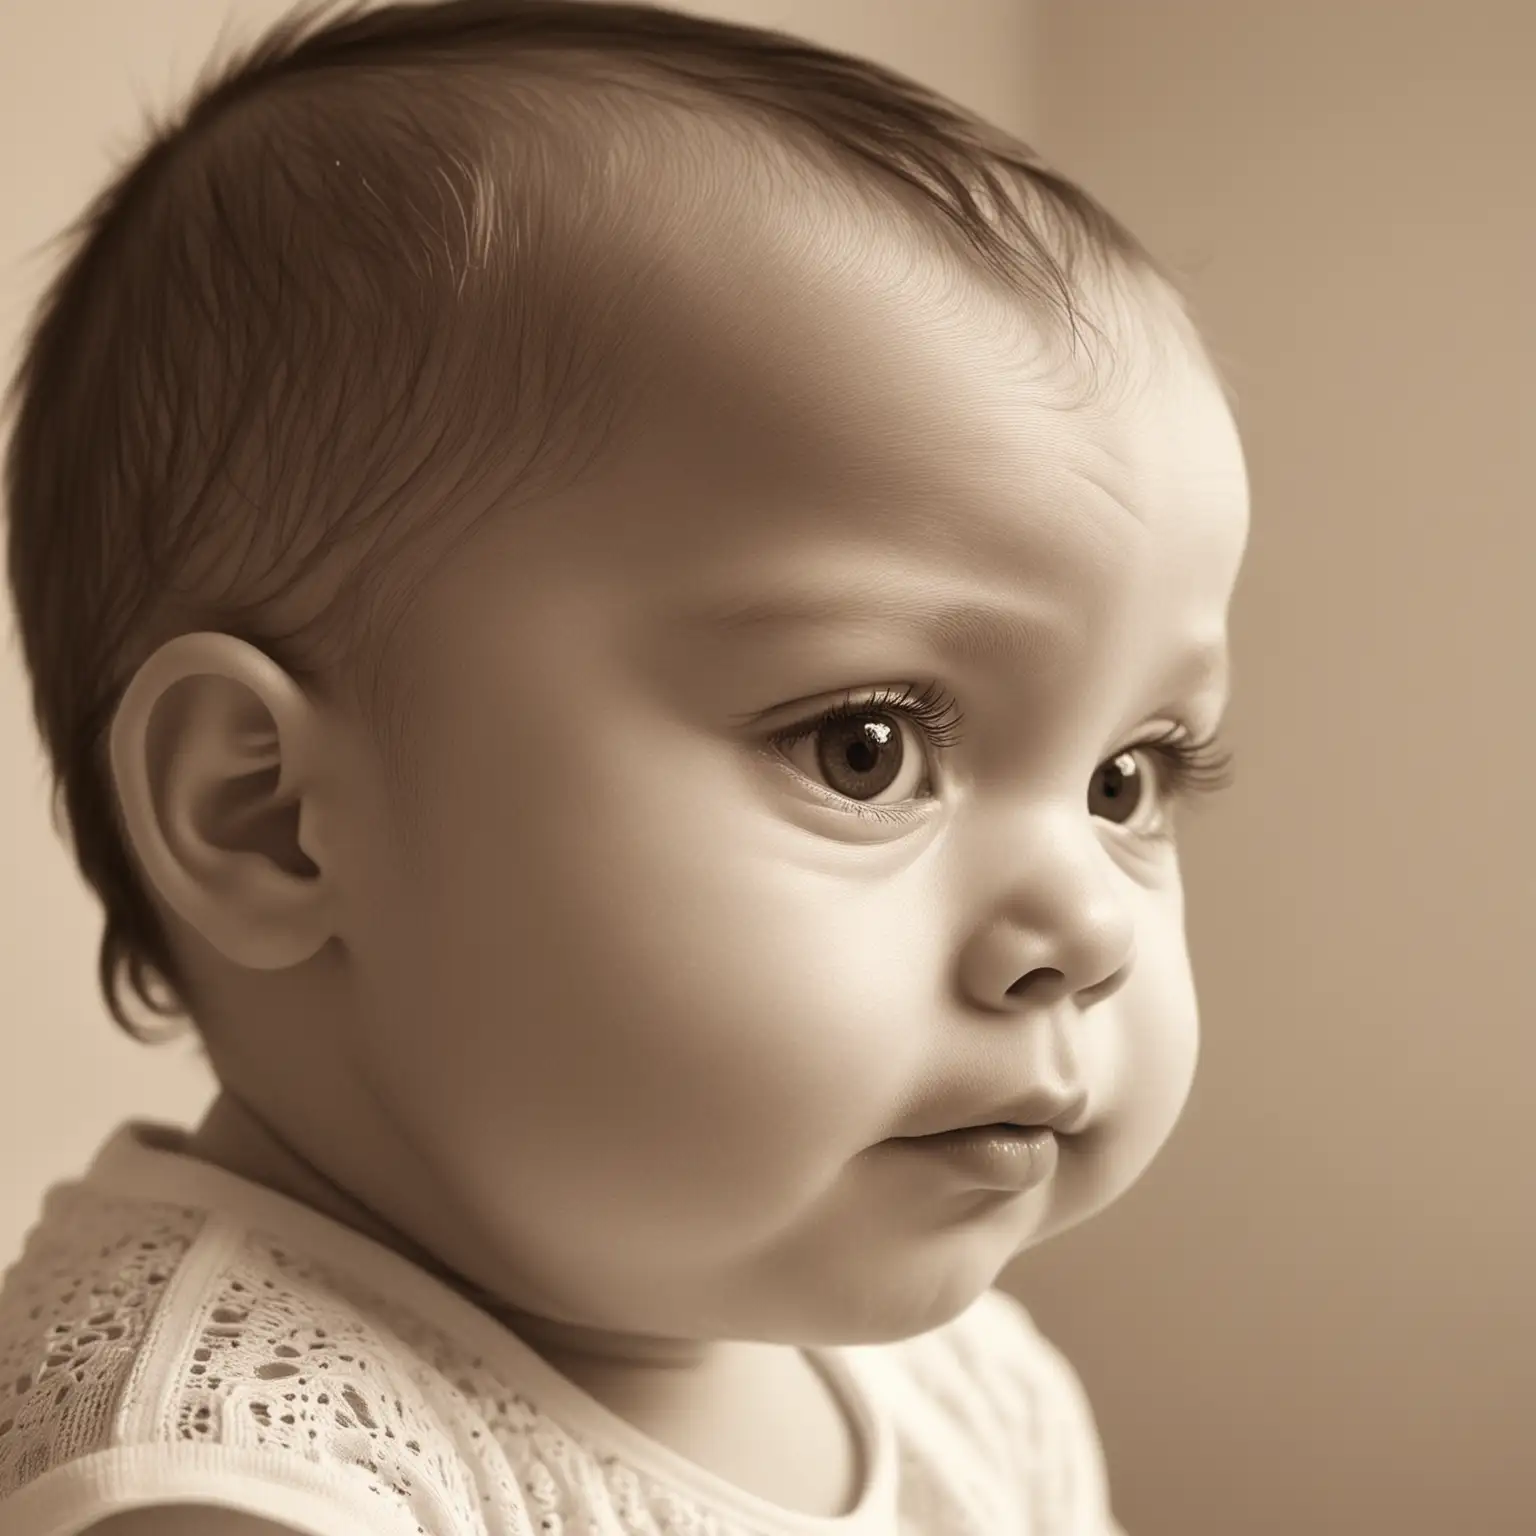 Sepia Profile Portrait of a Tender Infant